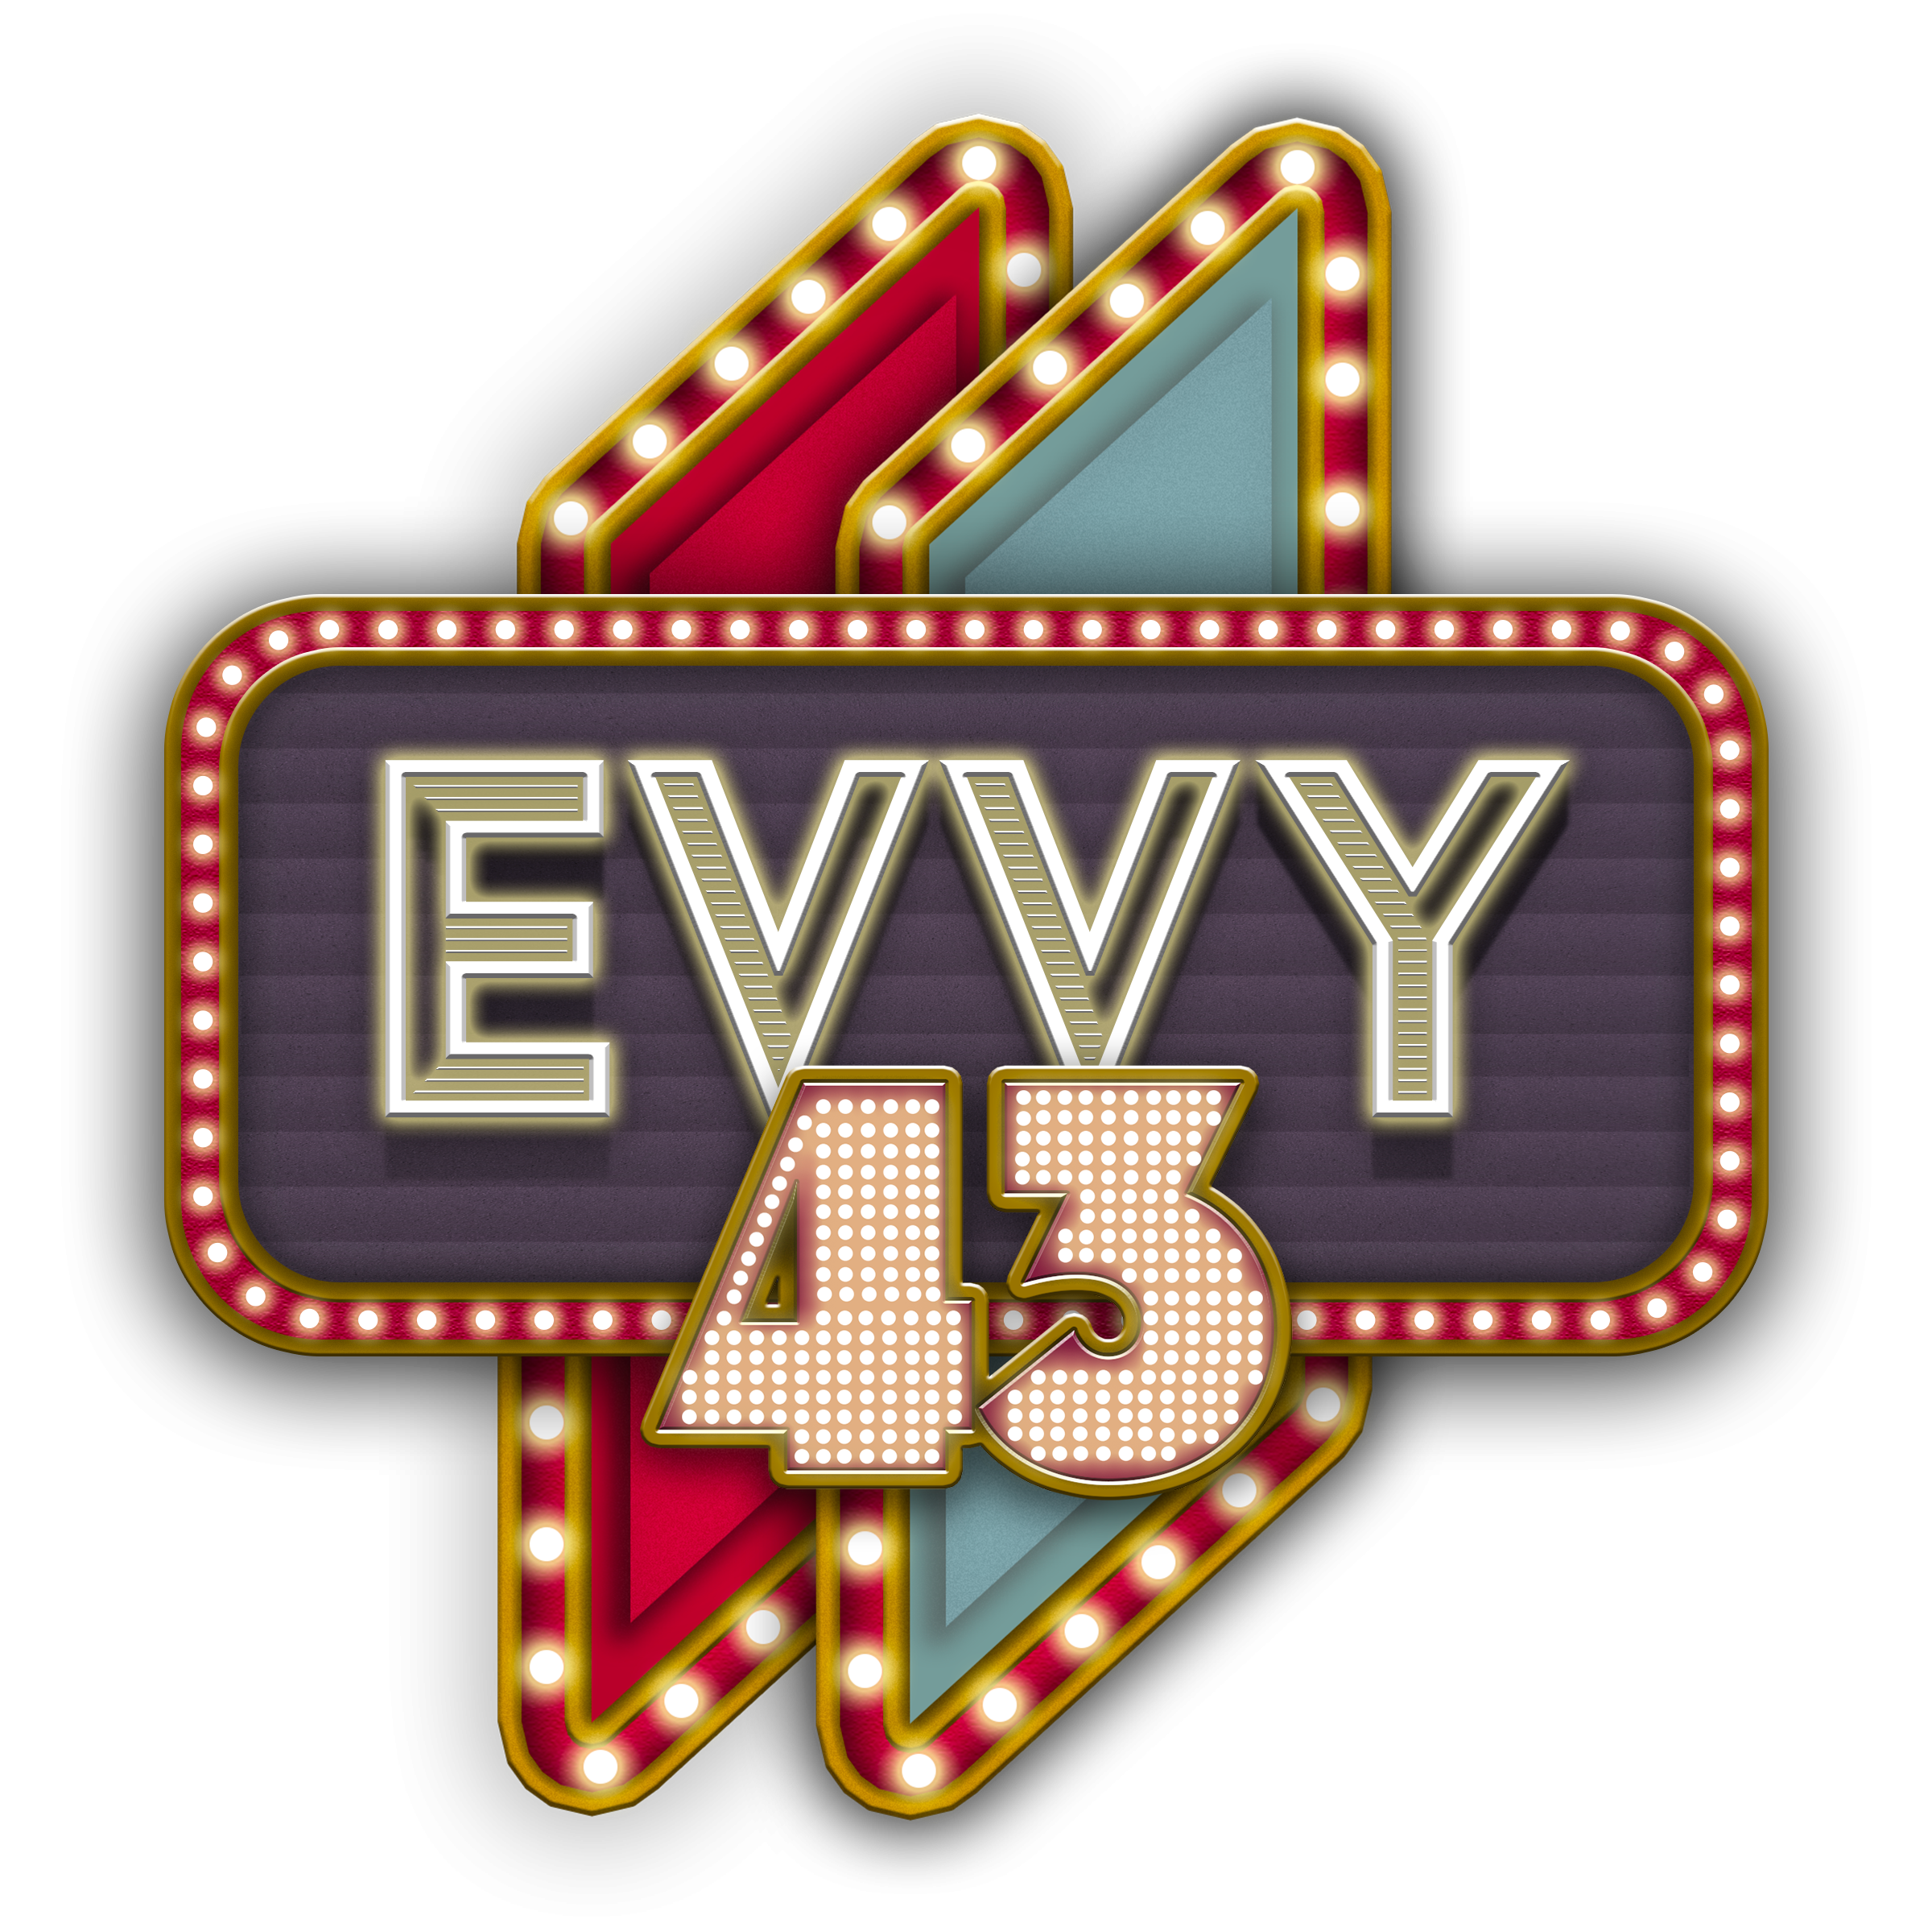 The EVVY Awards